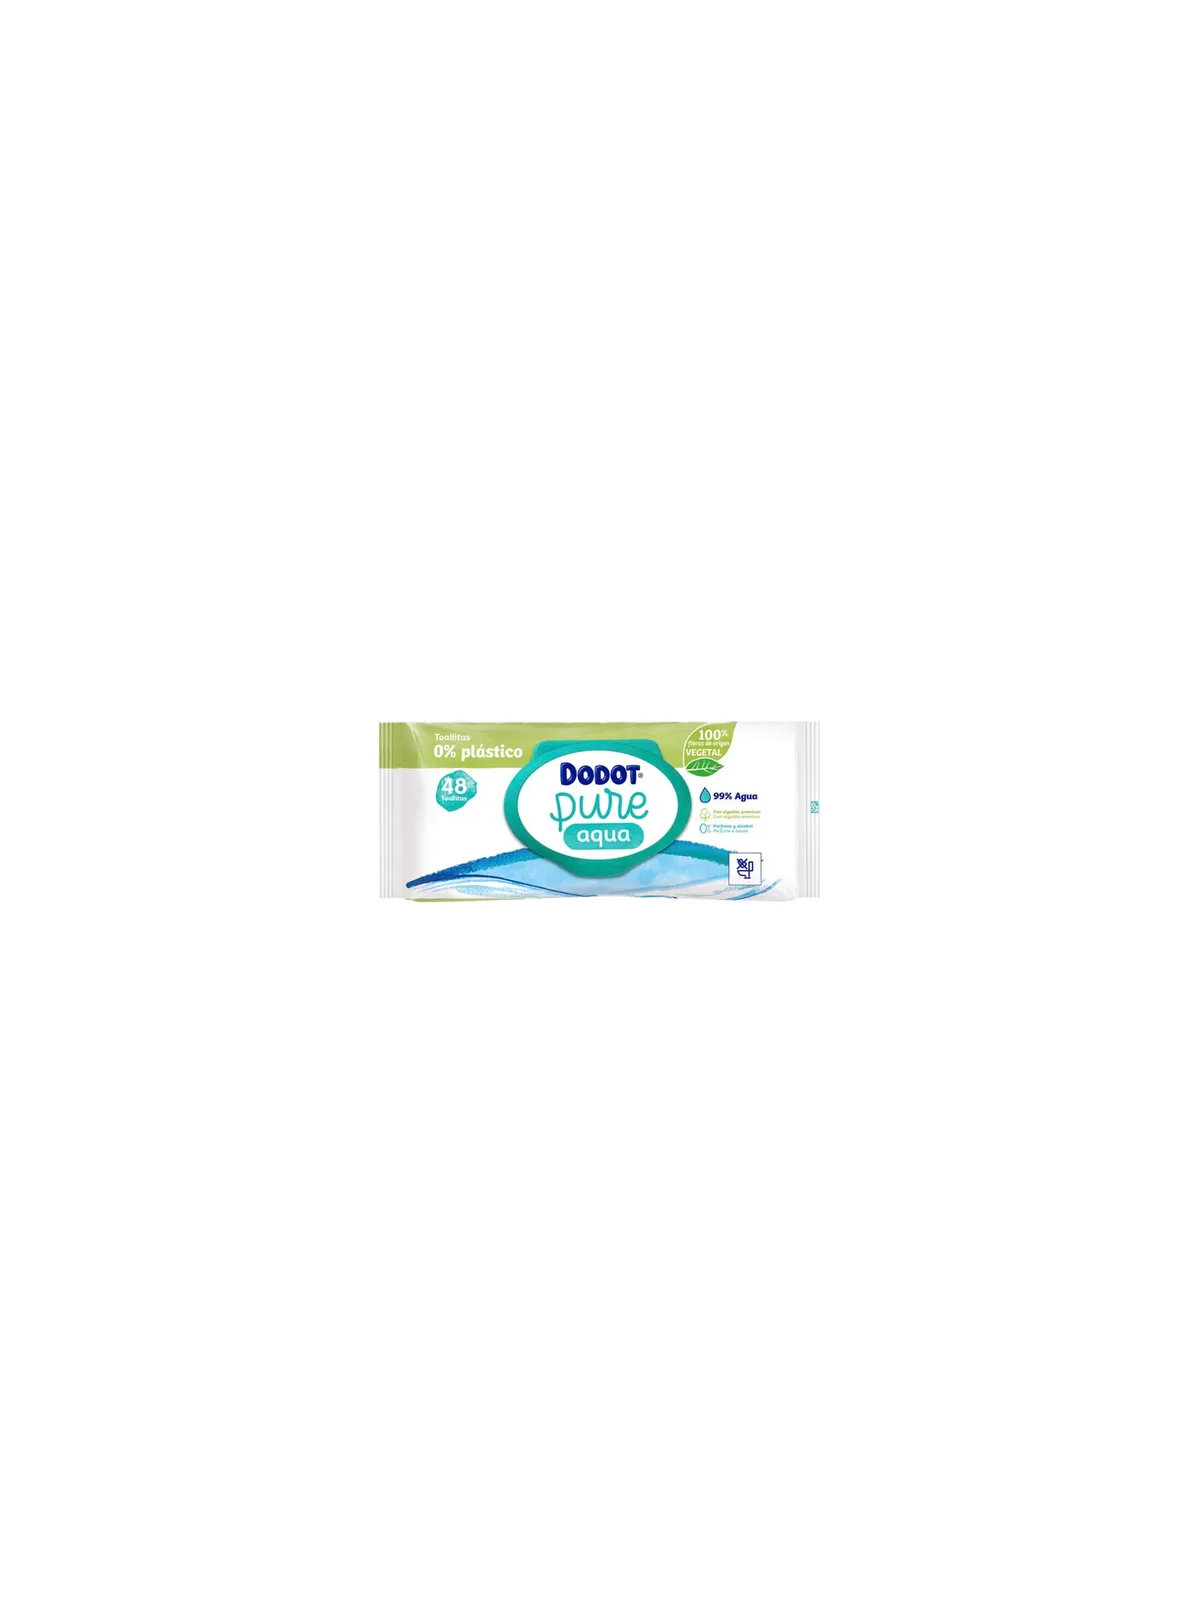 TOALLITAS Dodot® Pure Aqua Plastic Free